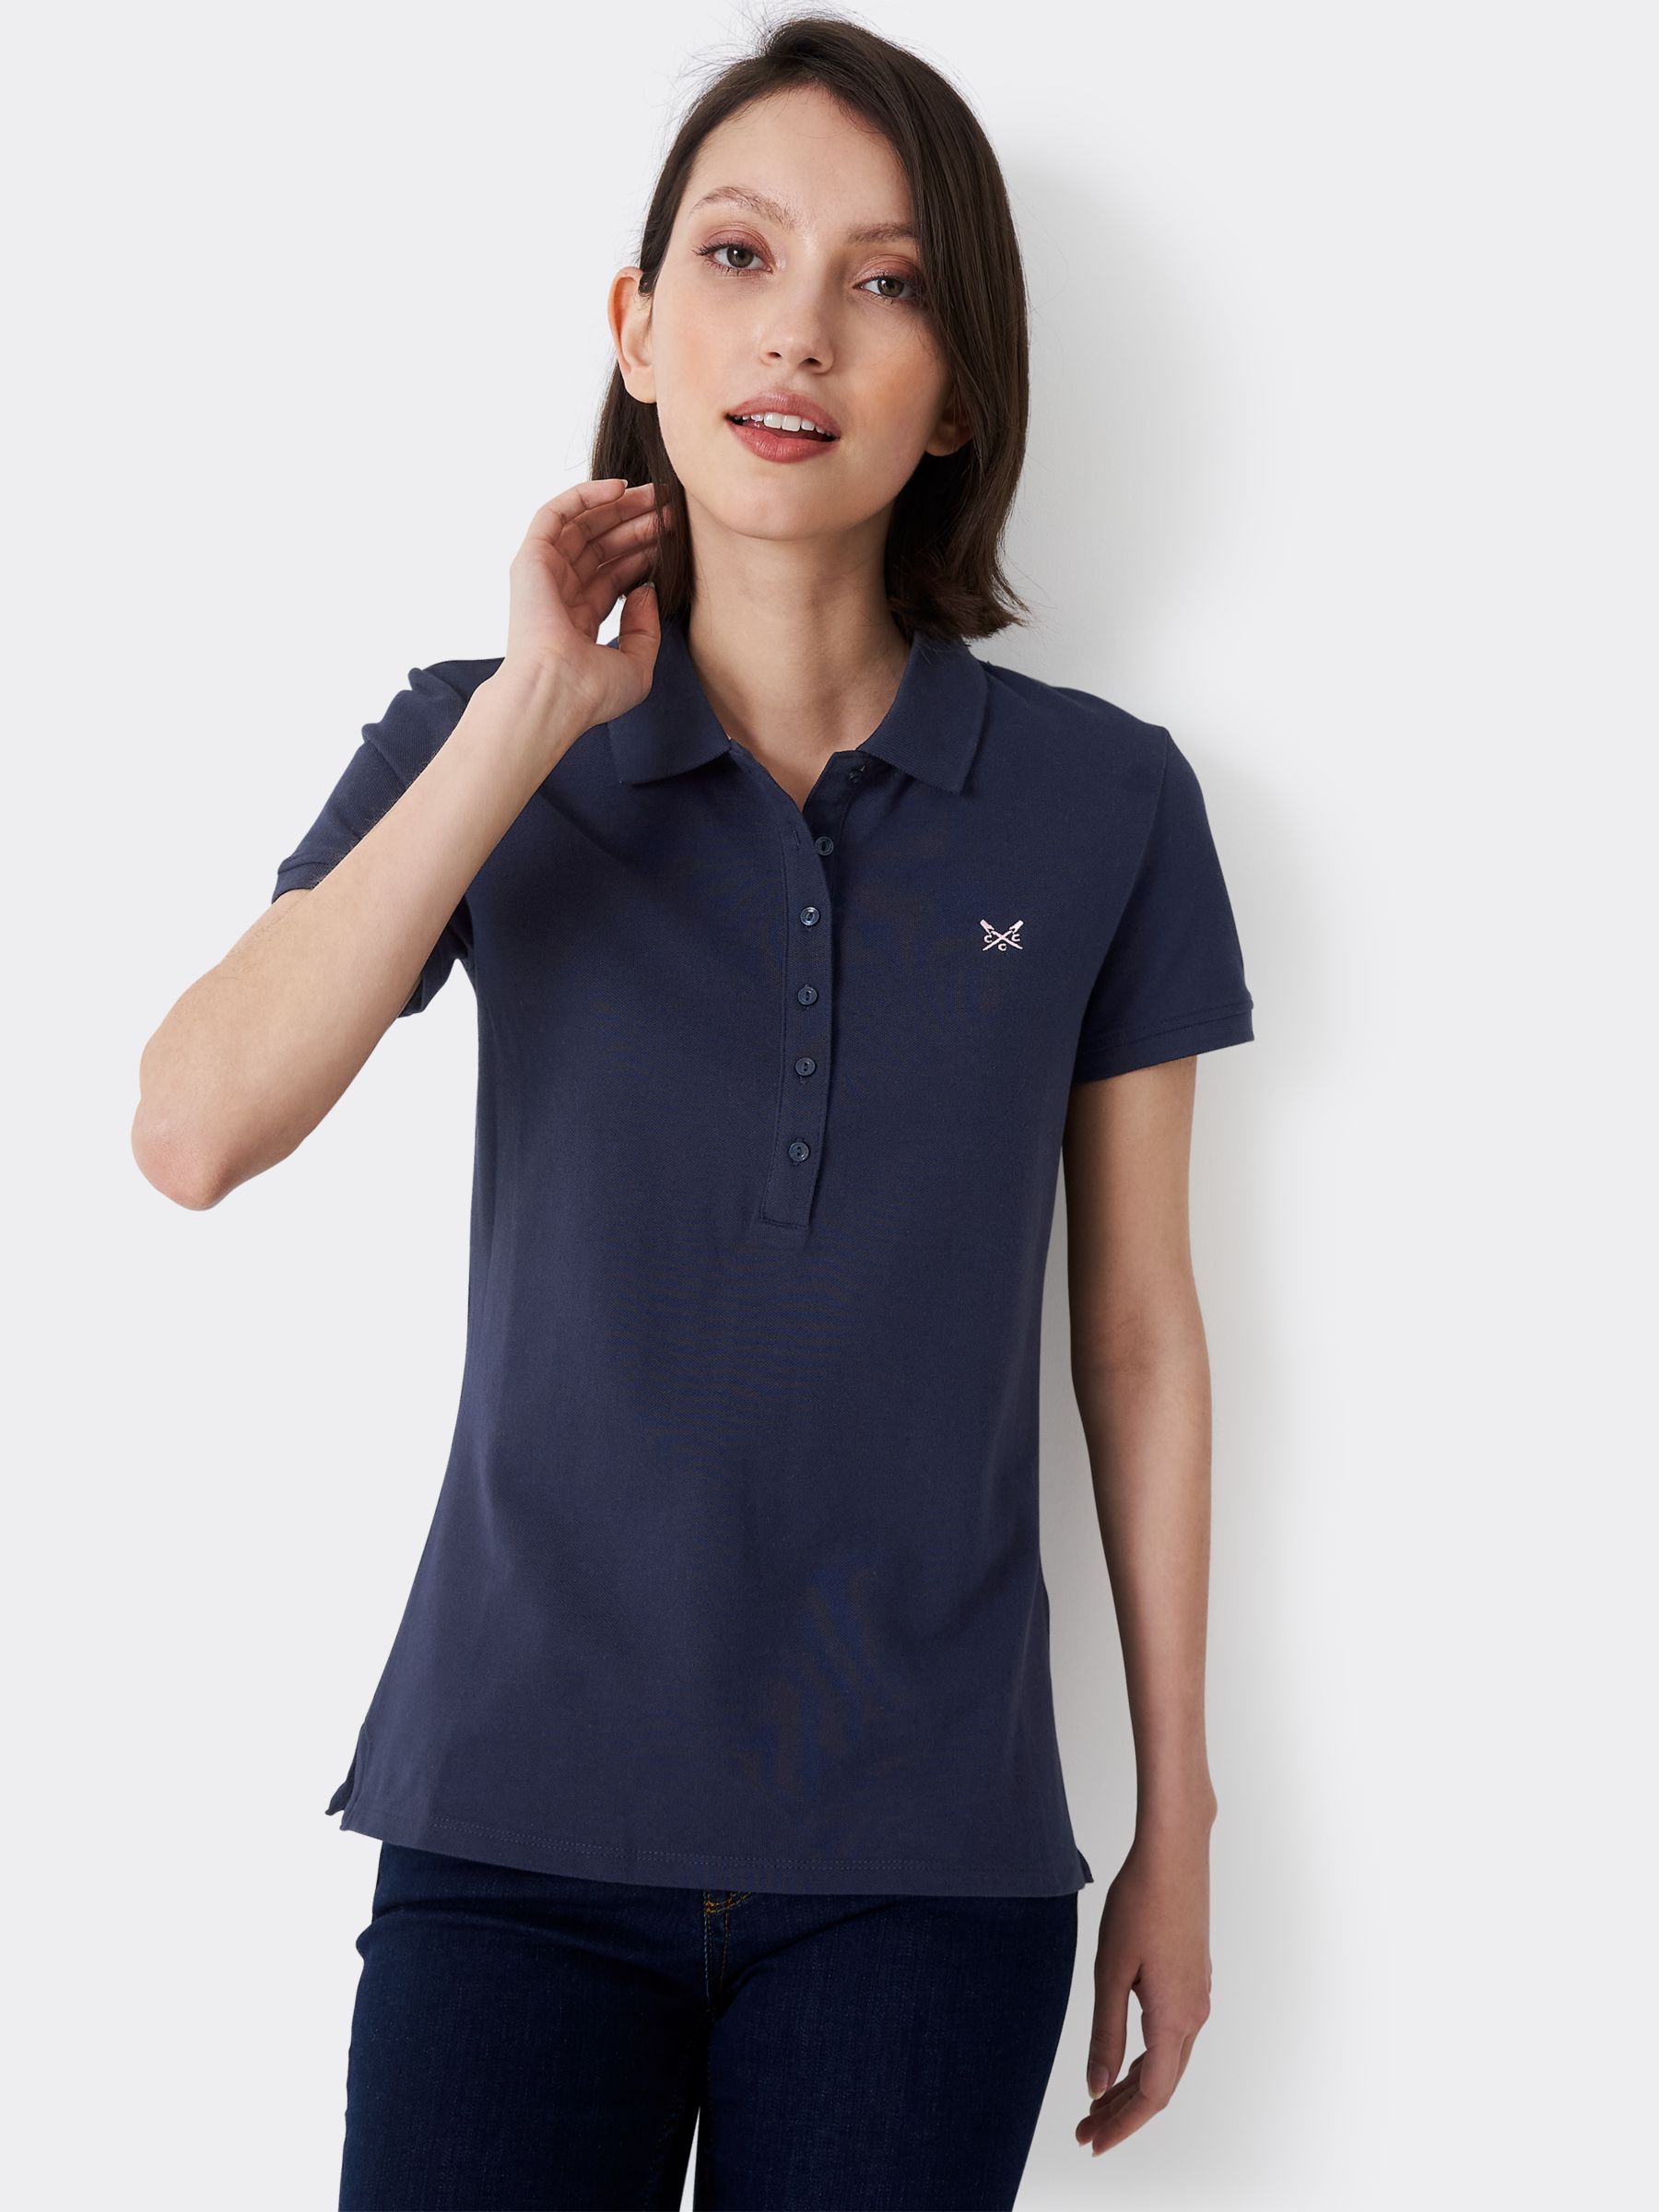 WOMEN FASHION Shirts & T-shirts Polo Sports Navy Blue/Red/White S Fila polo discount 76% 